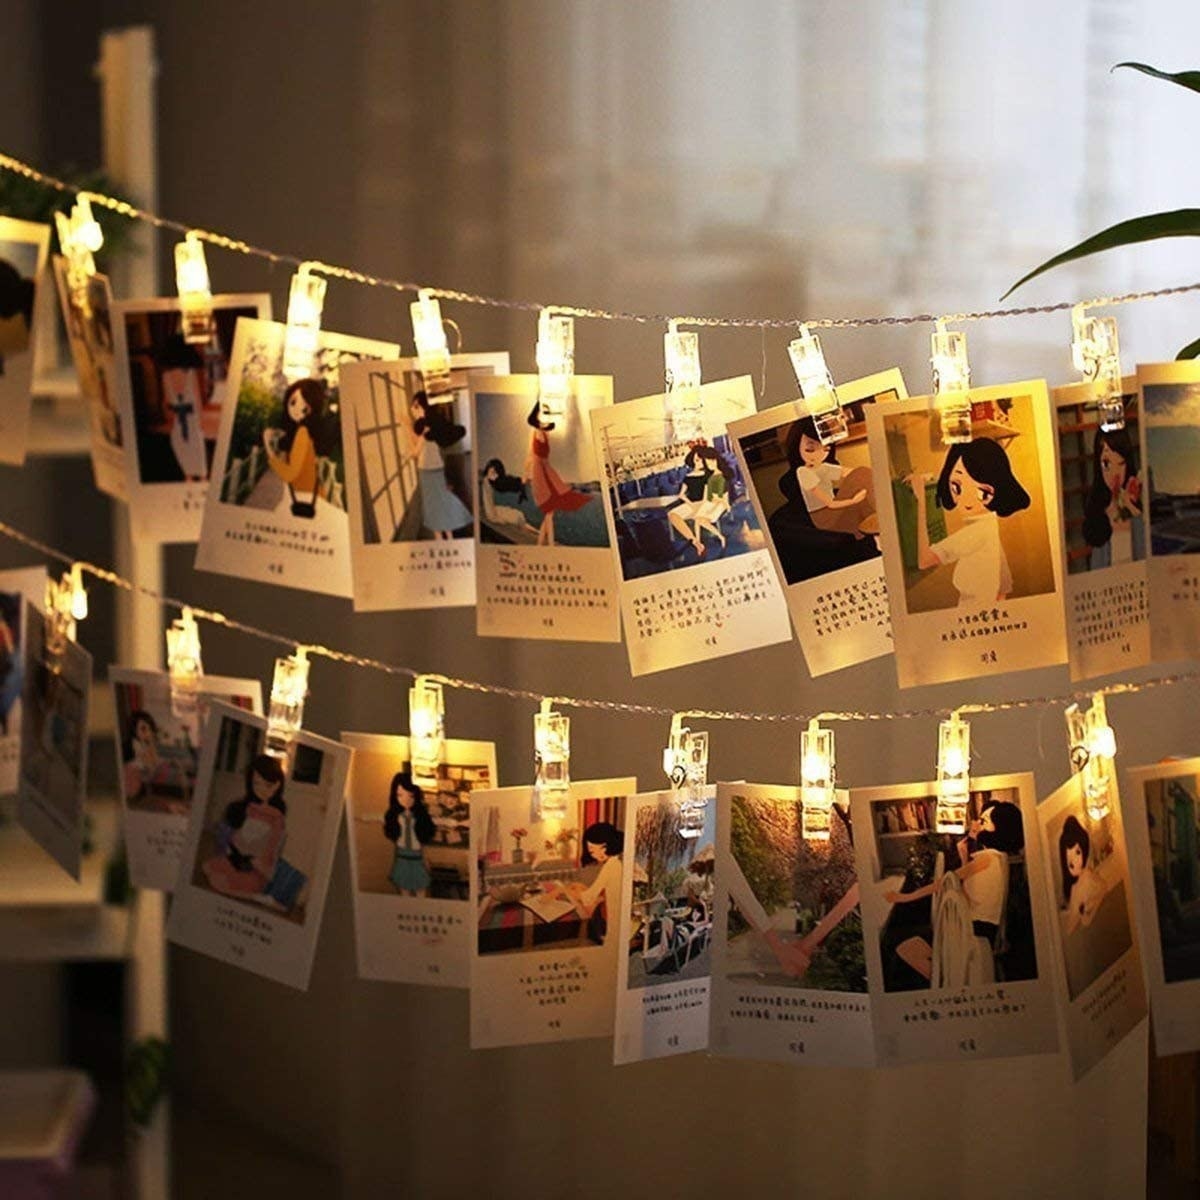 Rows of polaroid photos hung up against fairy lights